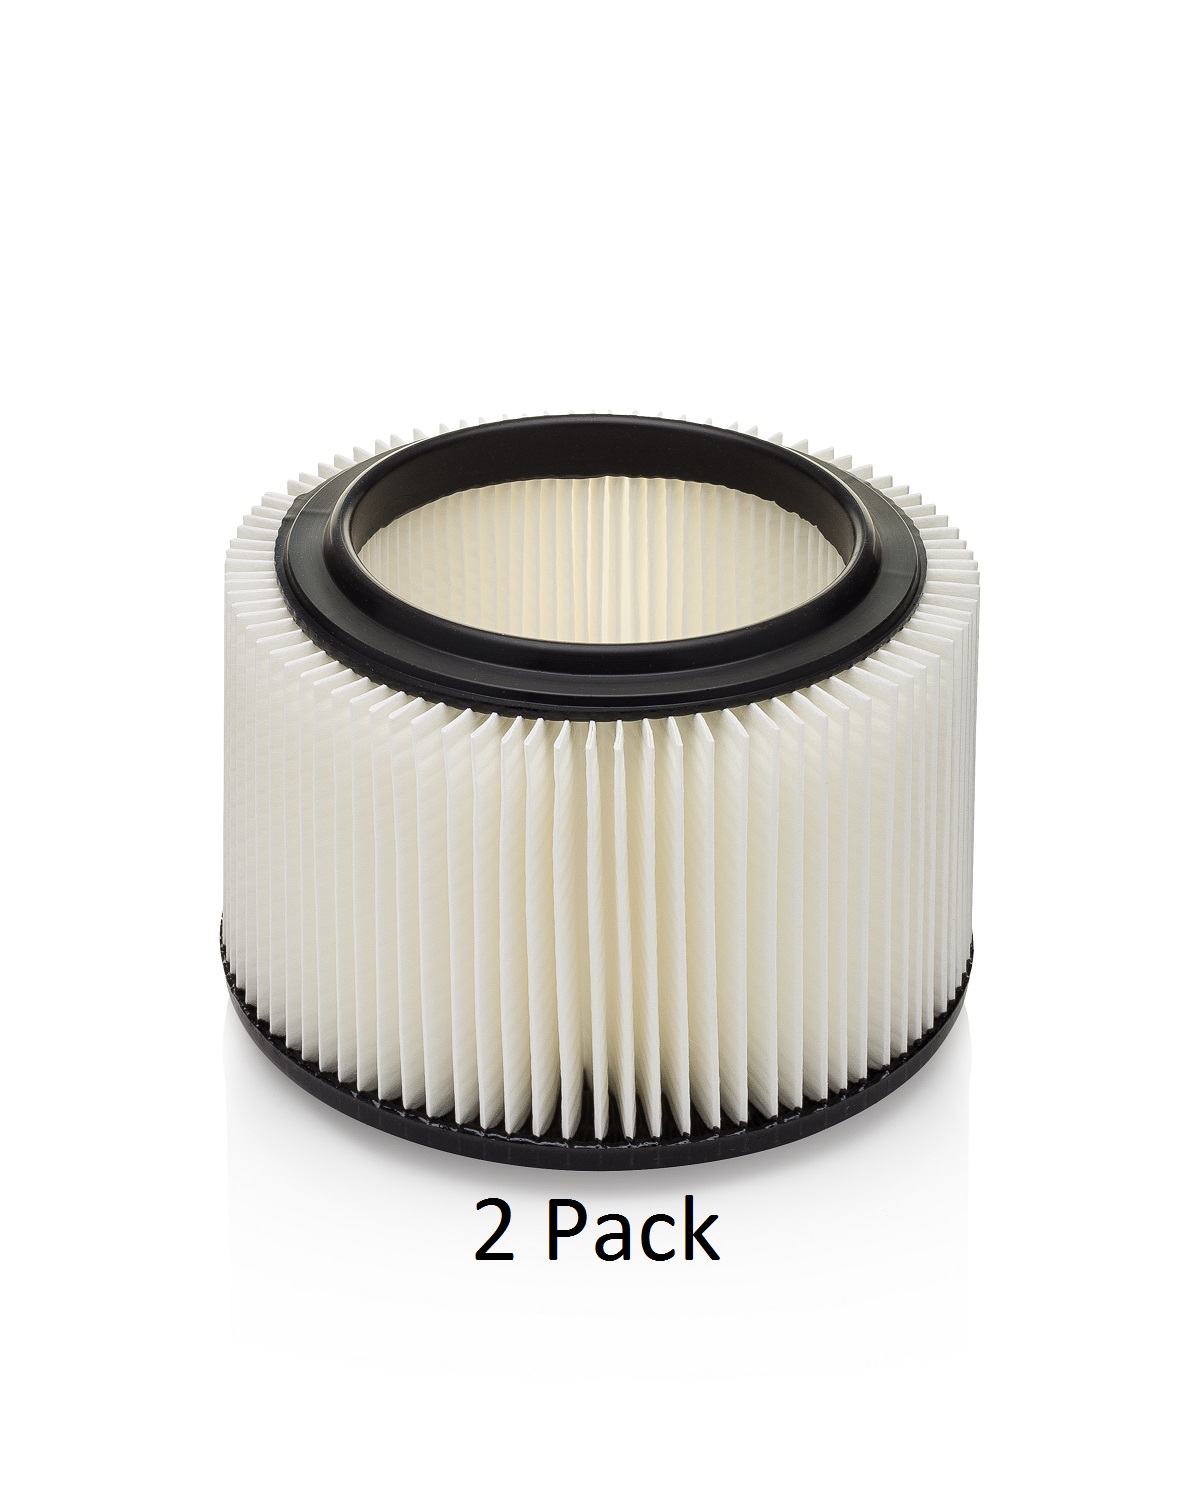 KoPach Filter Craftsman 3 & 4 gal. Replacement Filter 2 pack, Part # 17810